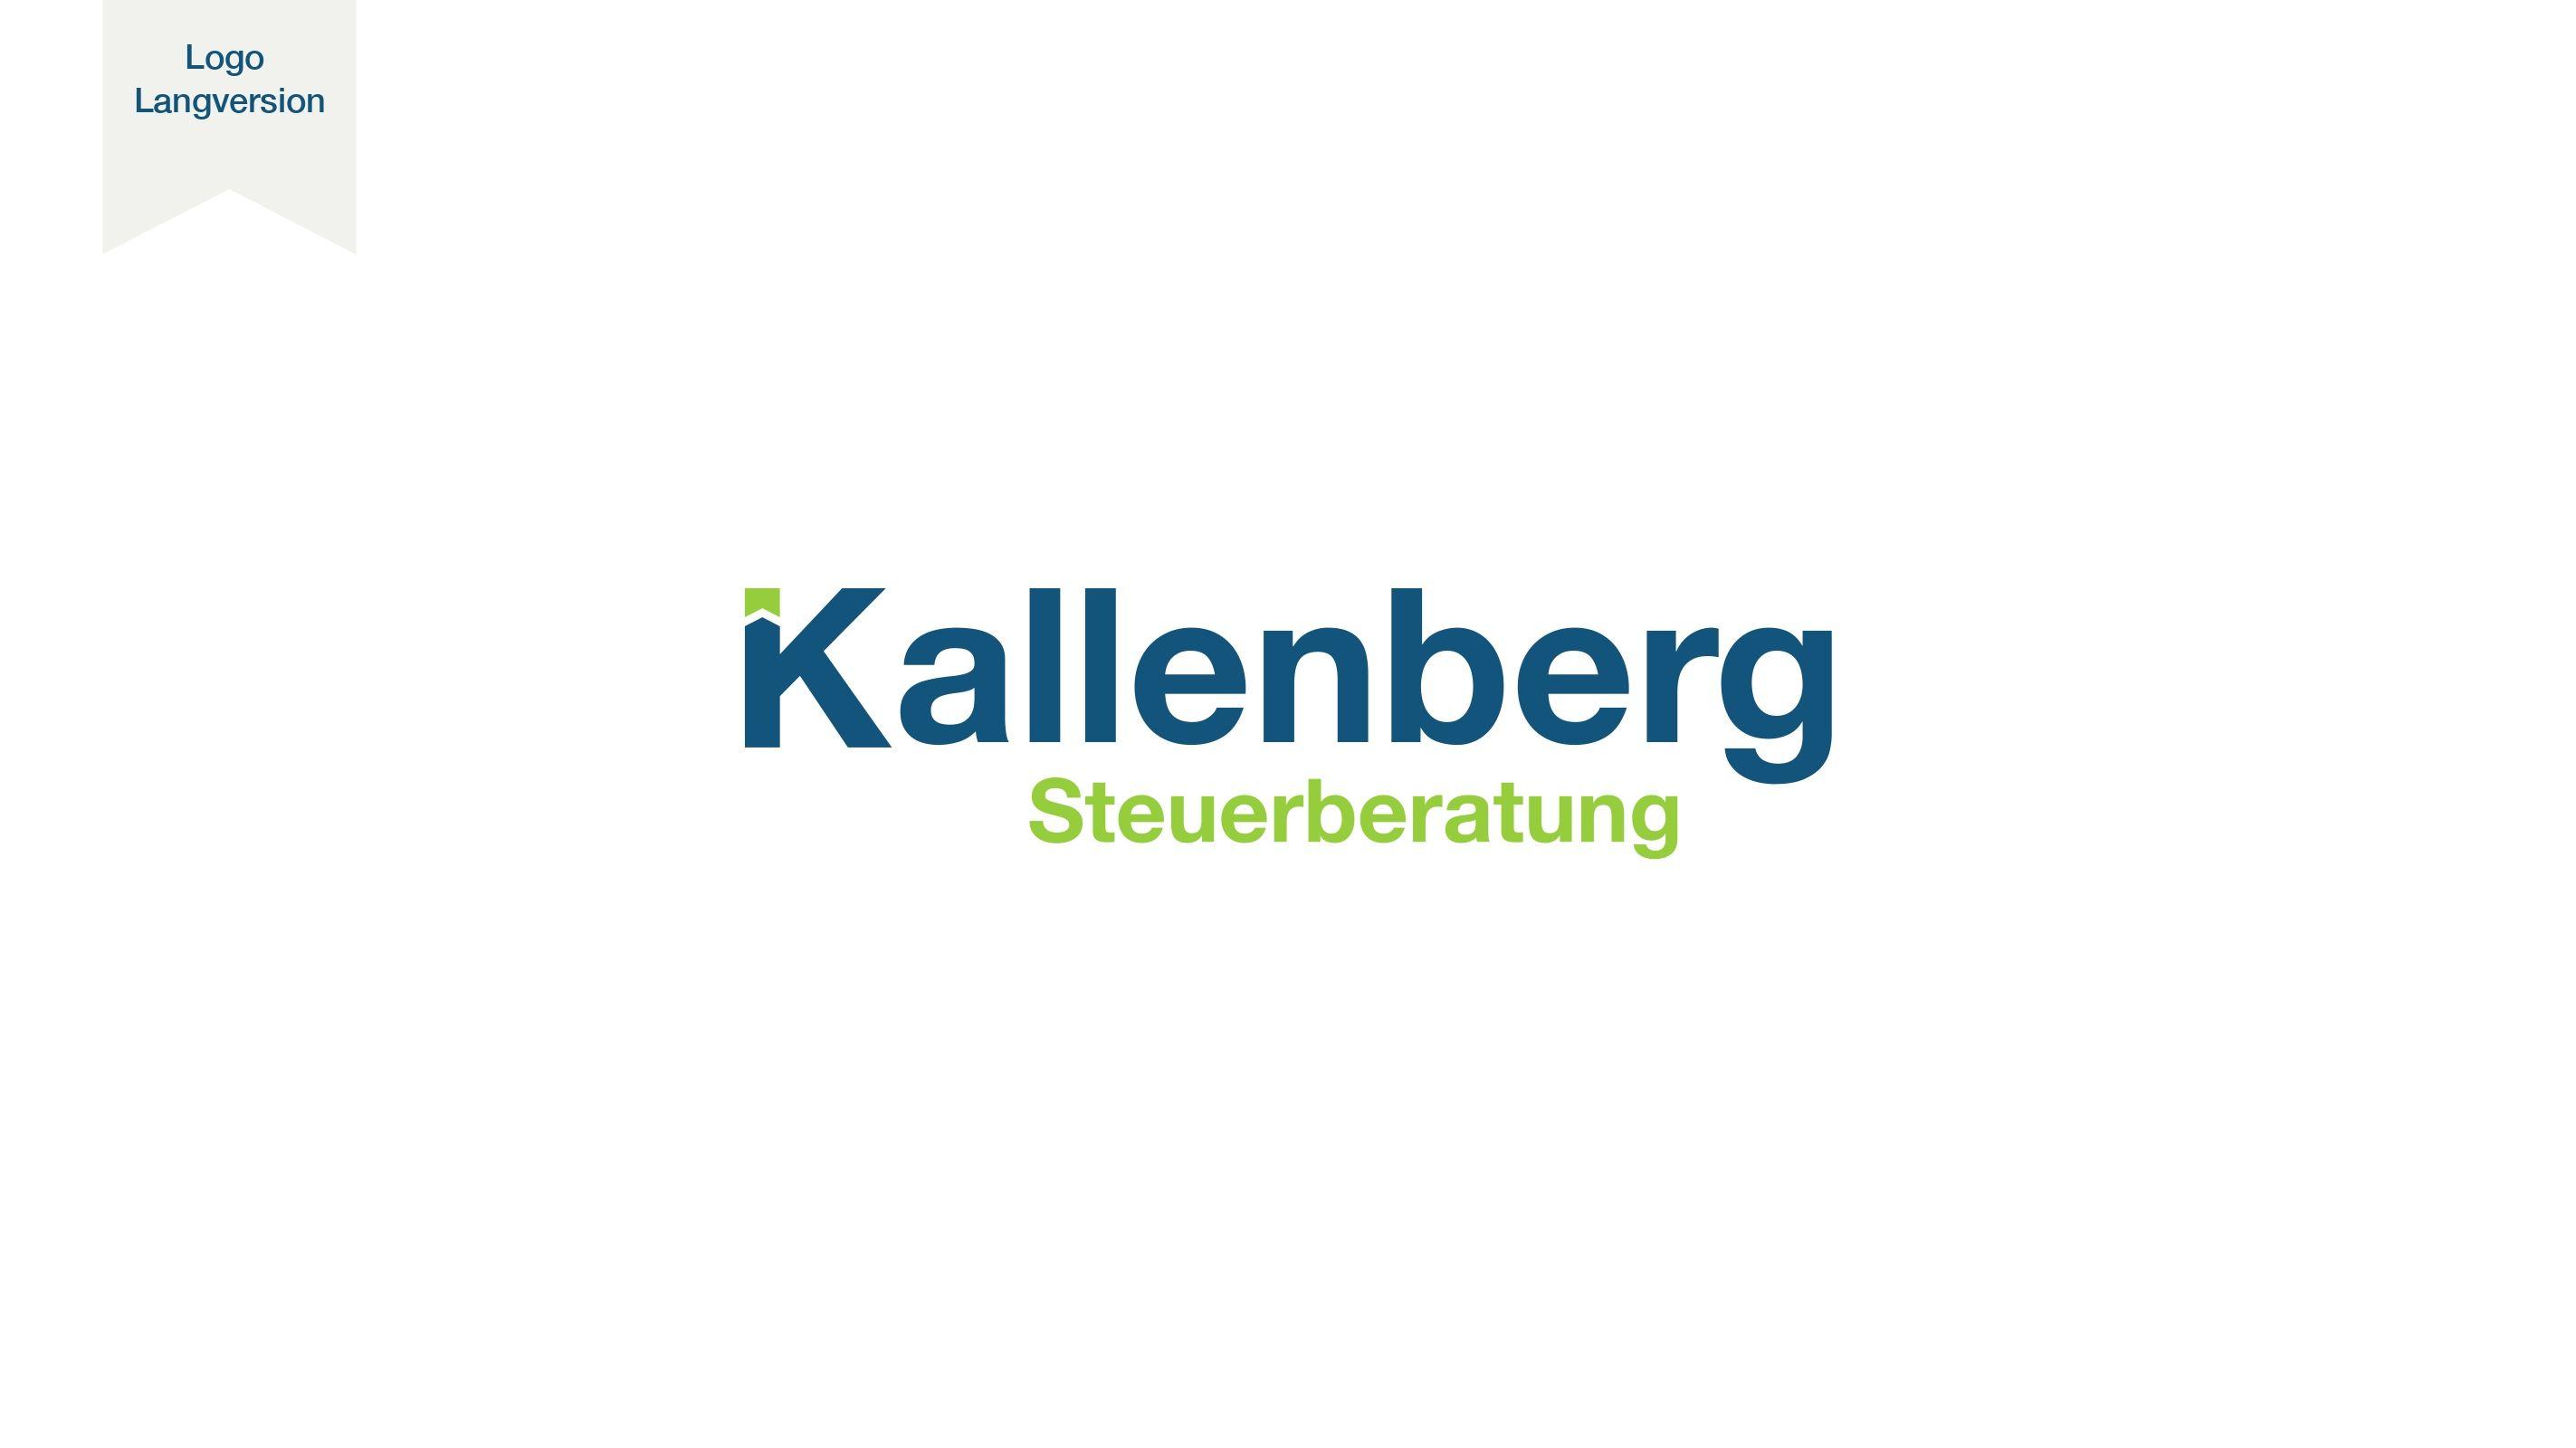 Kallenberg Steuerberatung - Visual Identity_page-0003.jpg